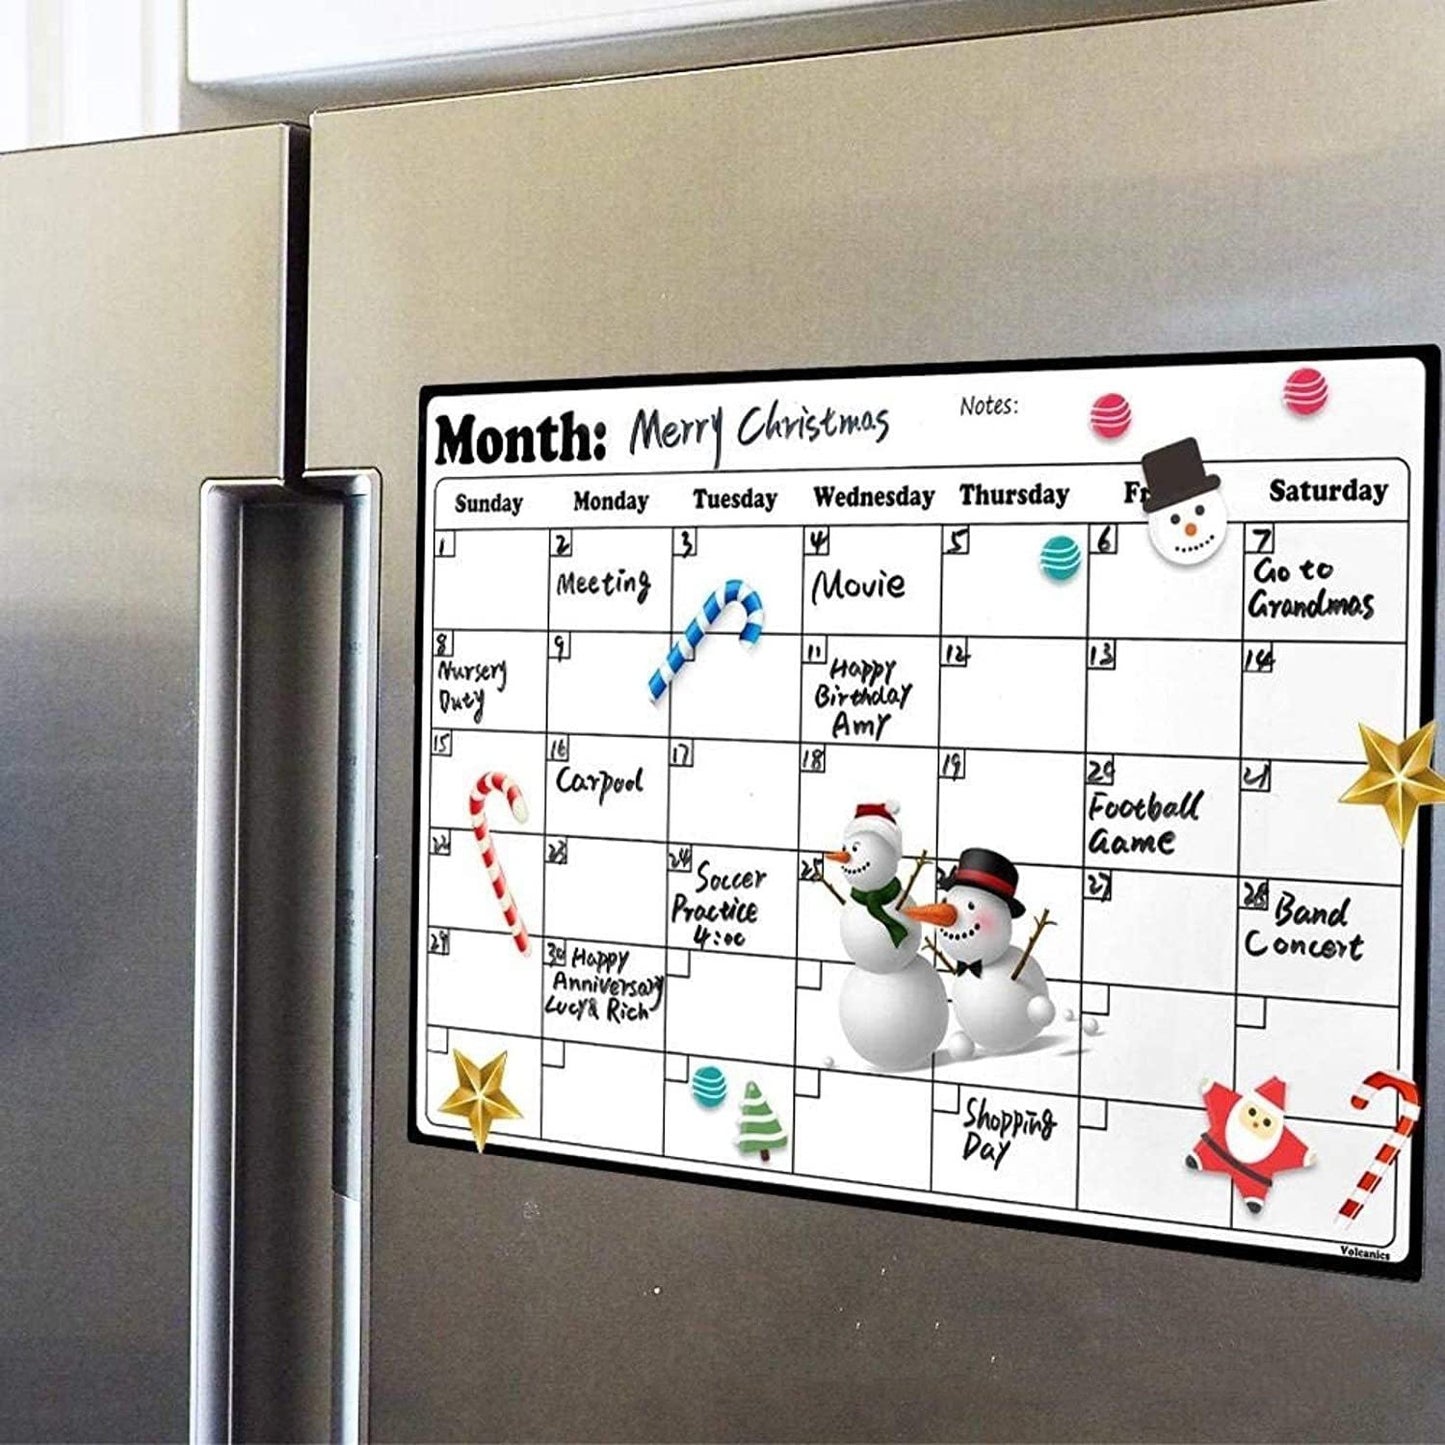 Monthly Schedule Memo Magnetic Refridgerator Magnets